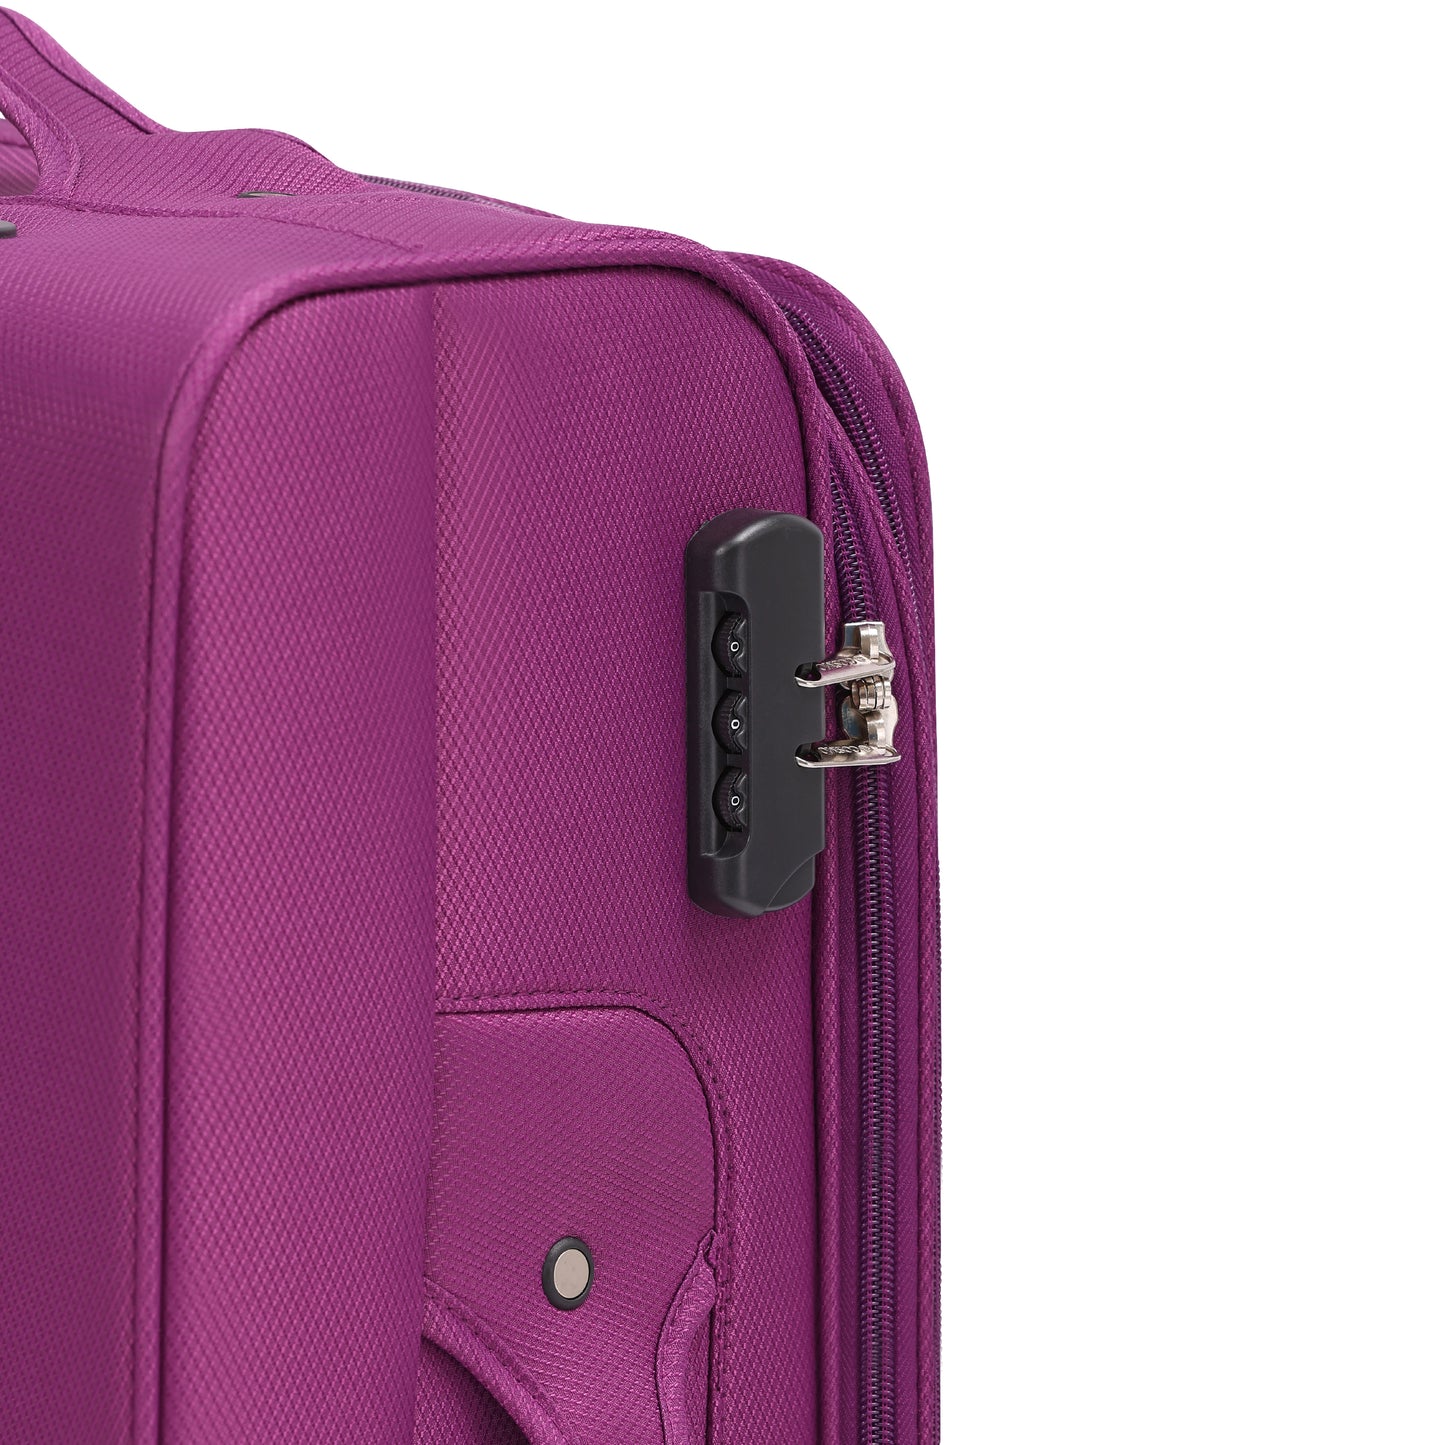 Cosmo Travelite 4W 70 cm Soft Luggage Trolley Case